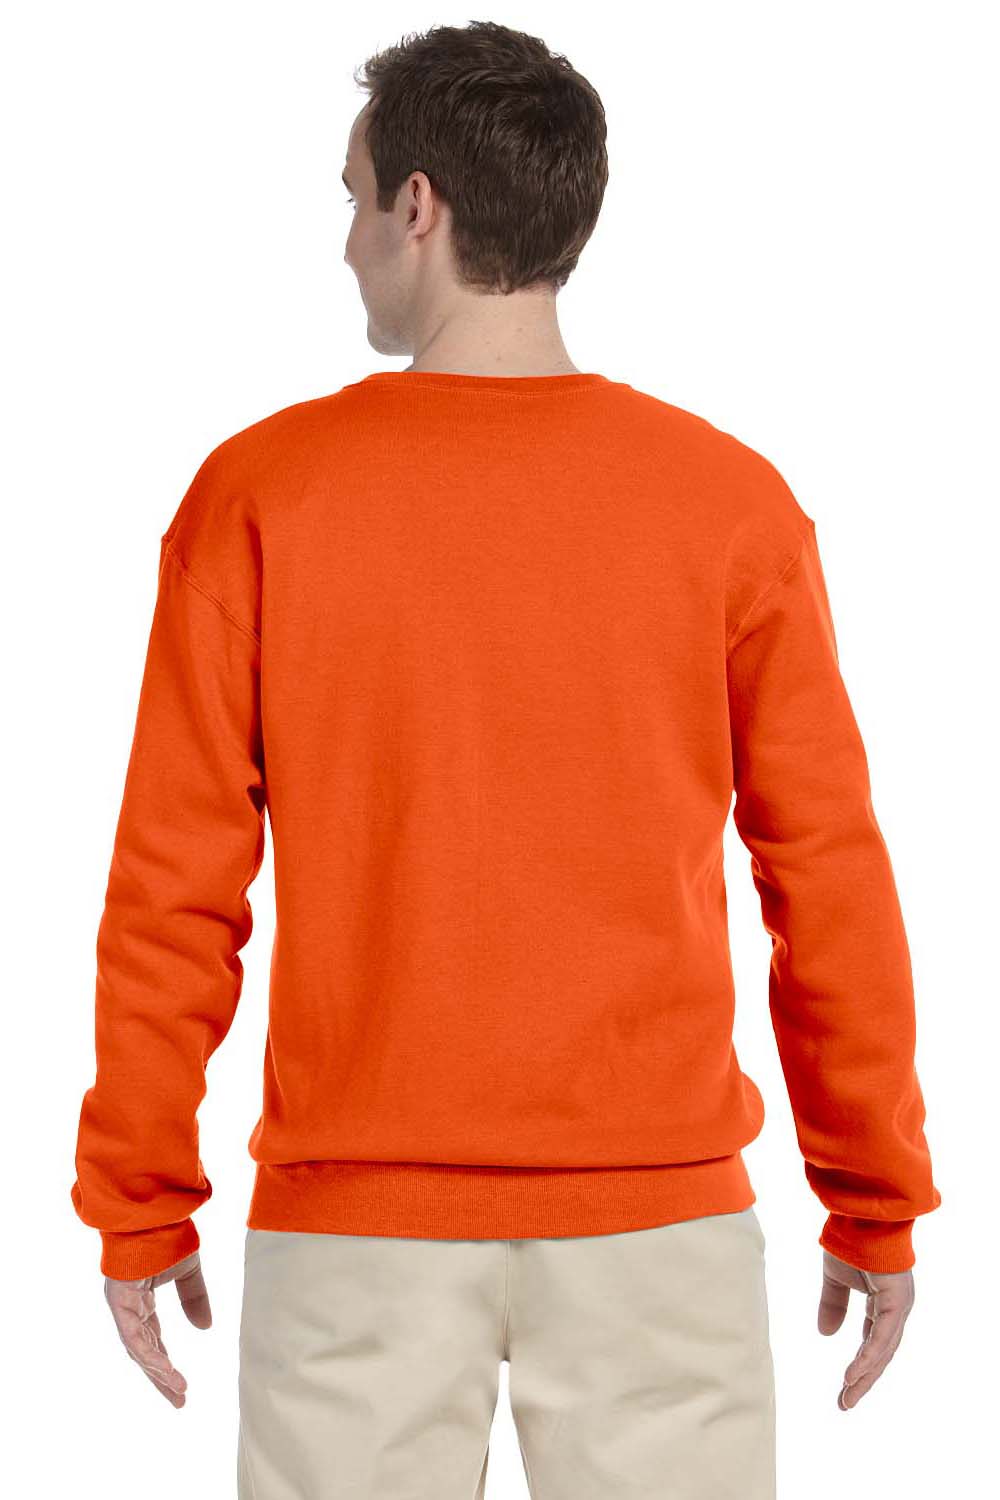 Jerzees 562 Mens NuBlend Fleece Crewneck Sweatshirt Safety Orange Back